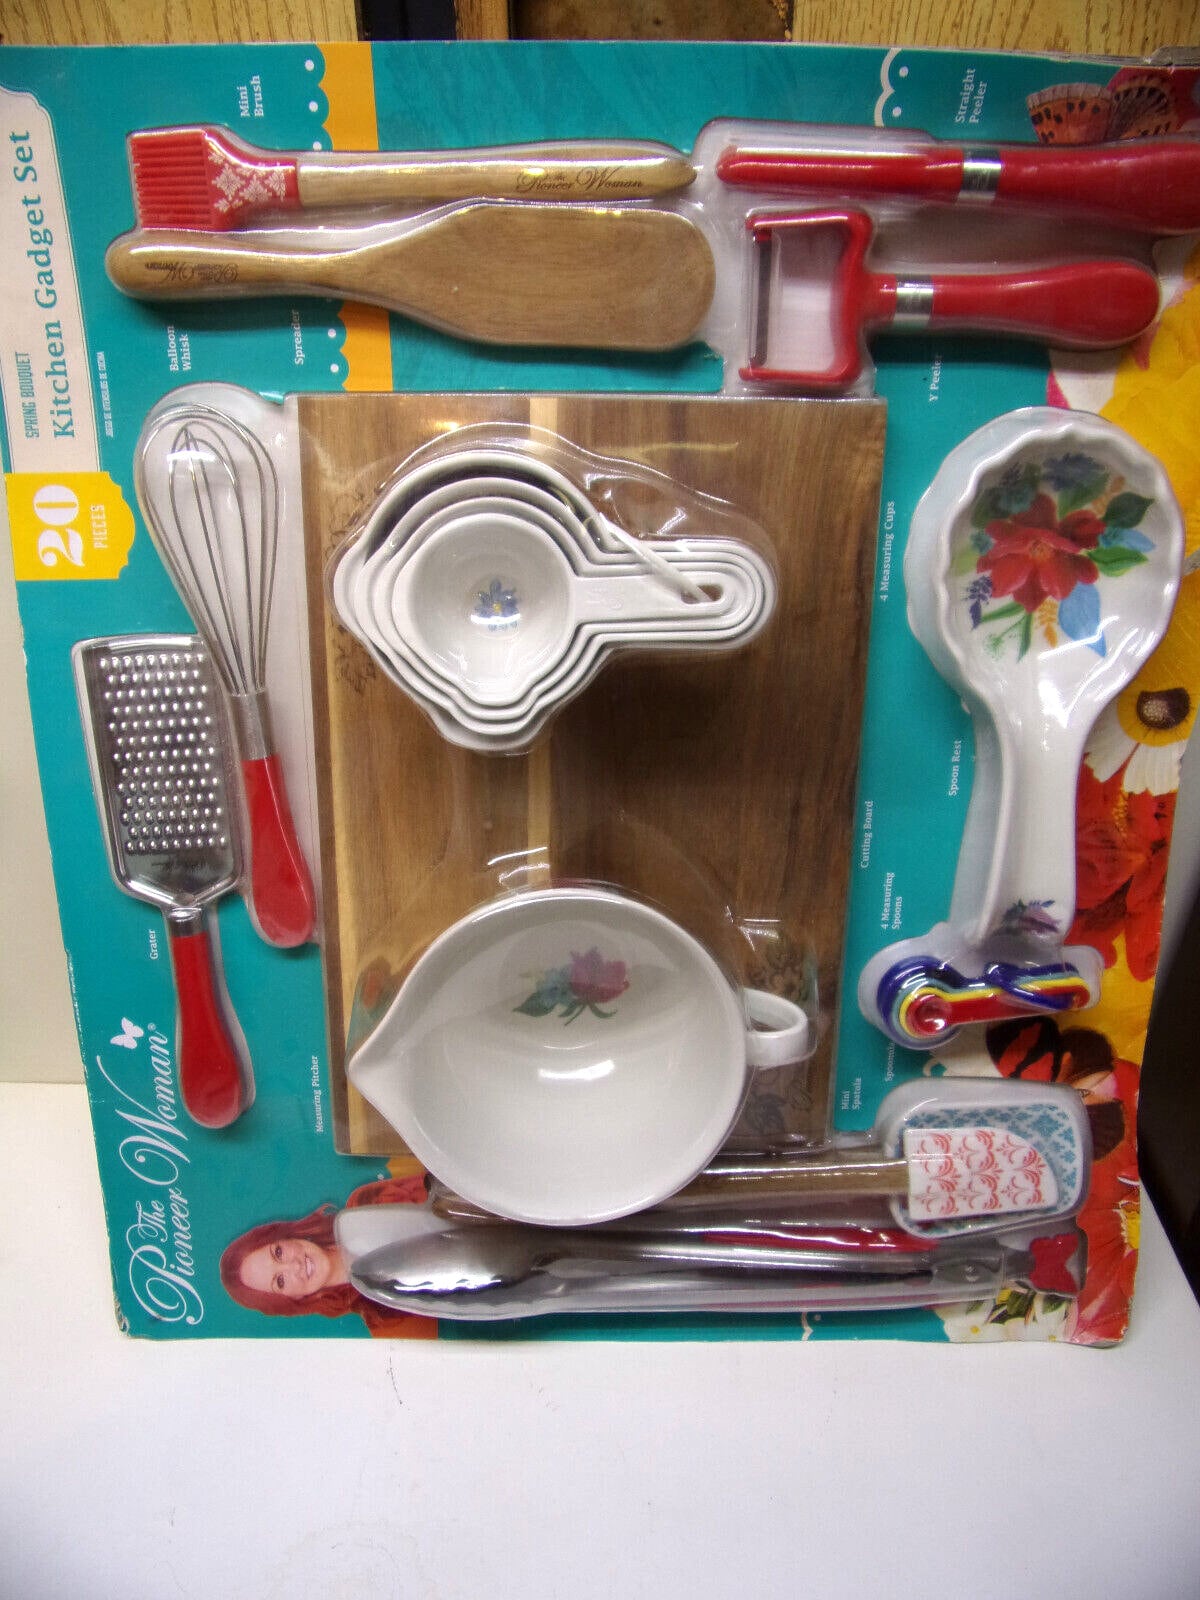 The Pioneer Woman 20-Piece Kitchen Gadget Set, Sweet Romance 